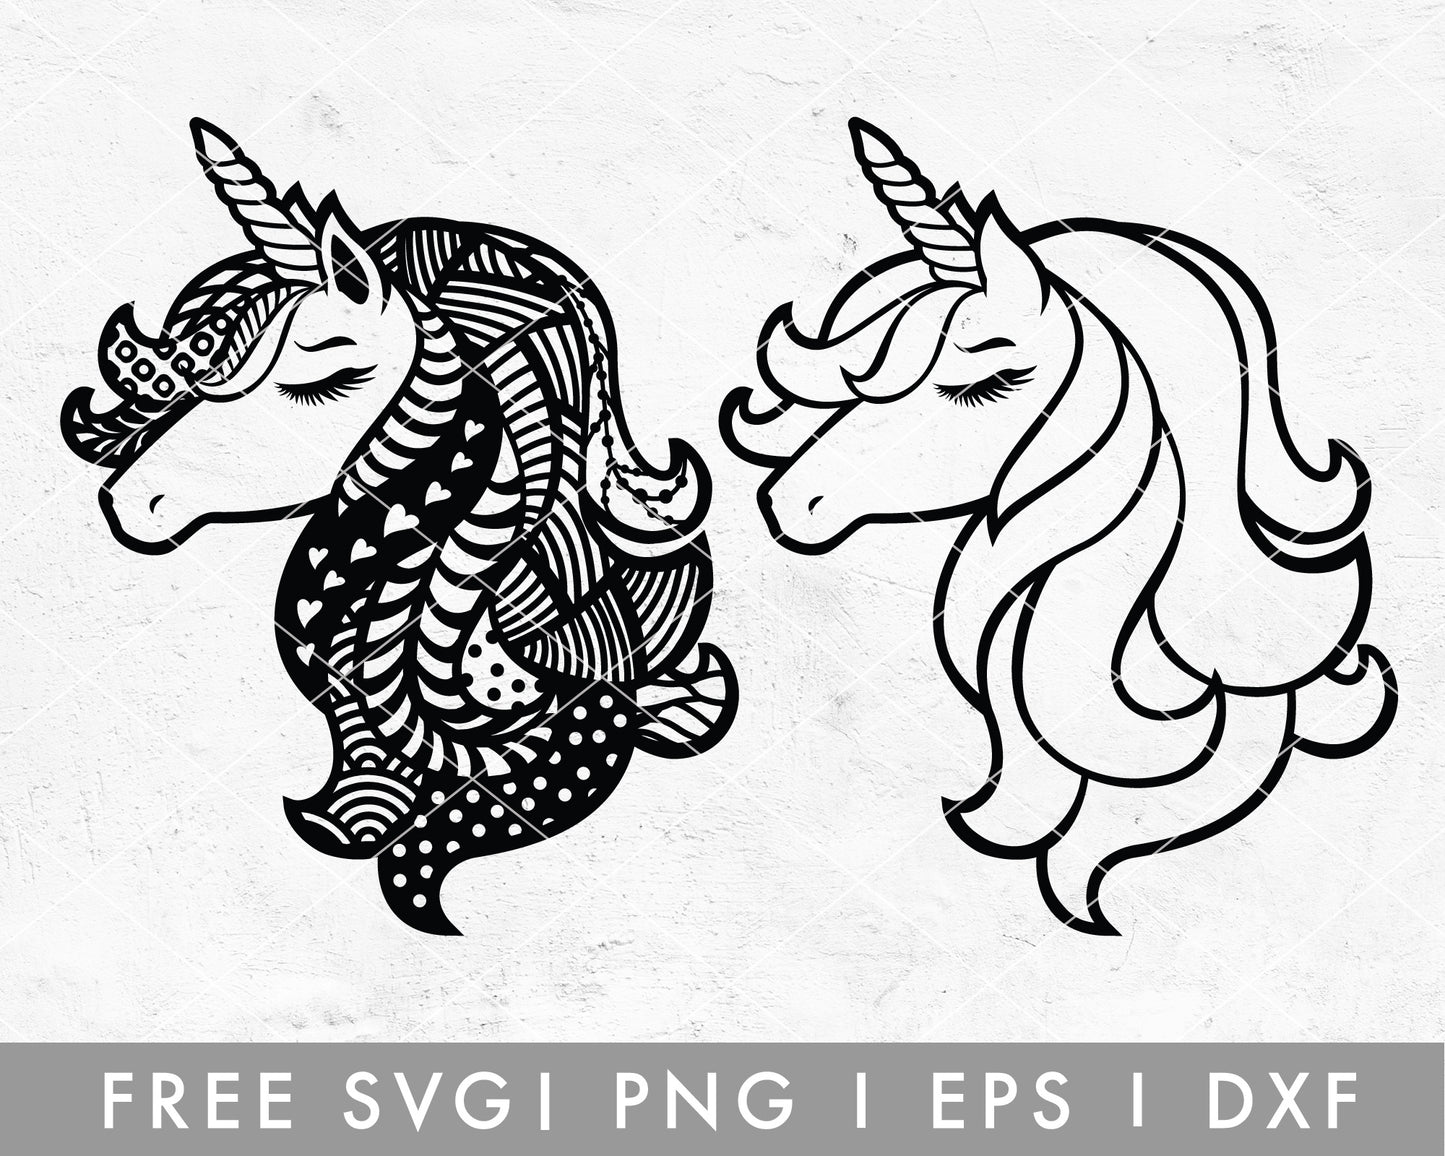 FREE FREE Unicorn SVG | Manadala Unicorn SVG Cut File for Cricut, Cameo Silhouette | Free SVG Cut File